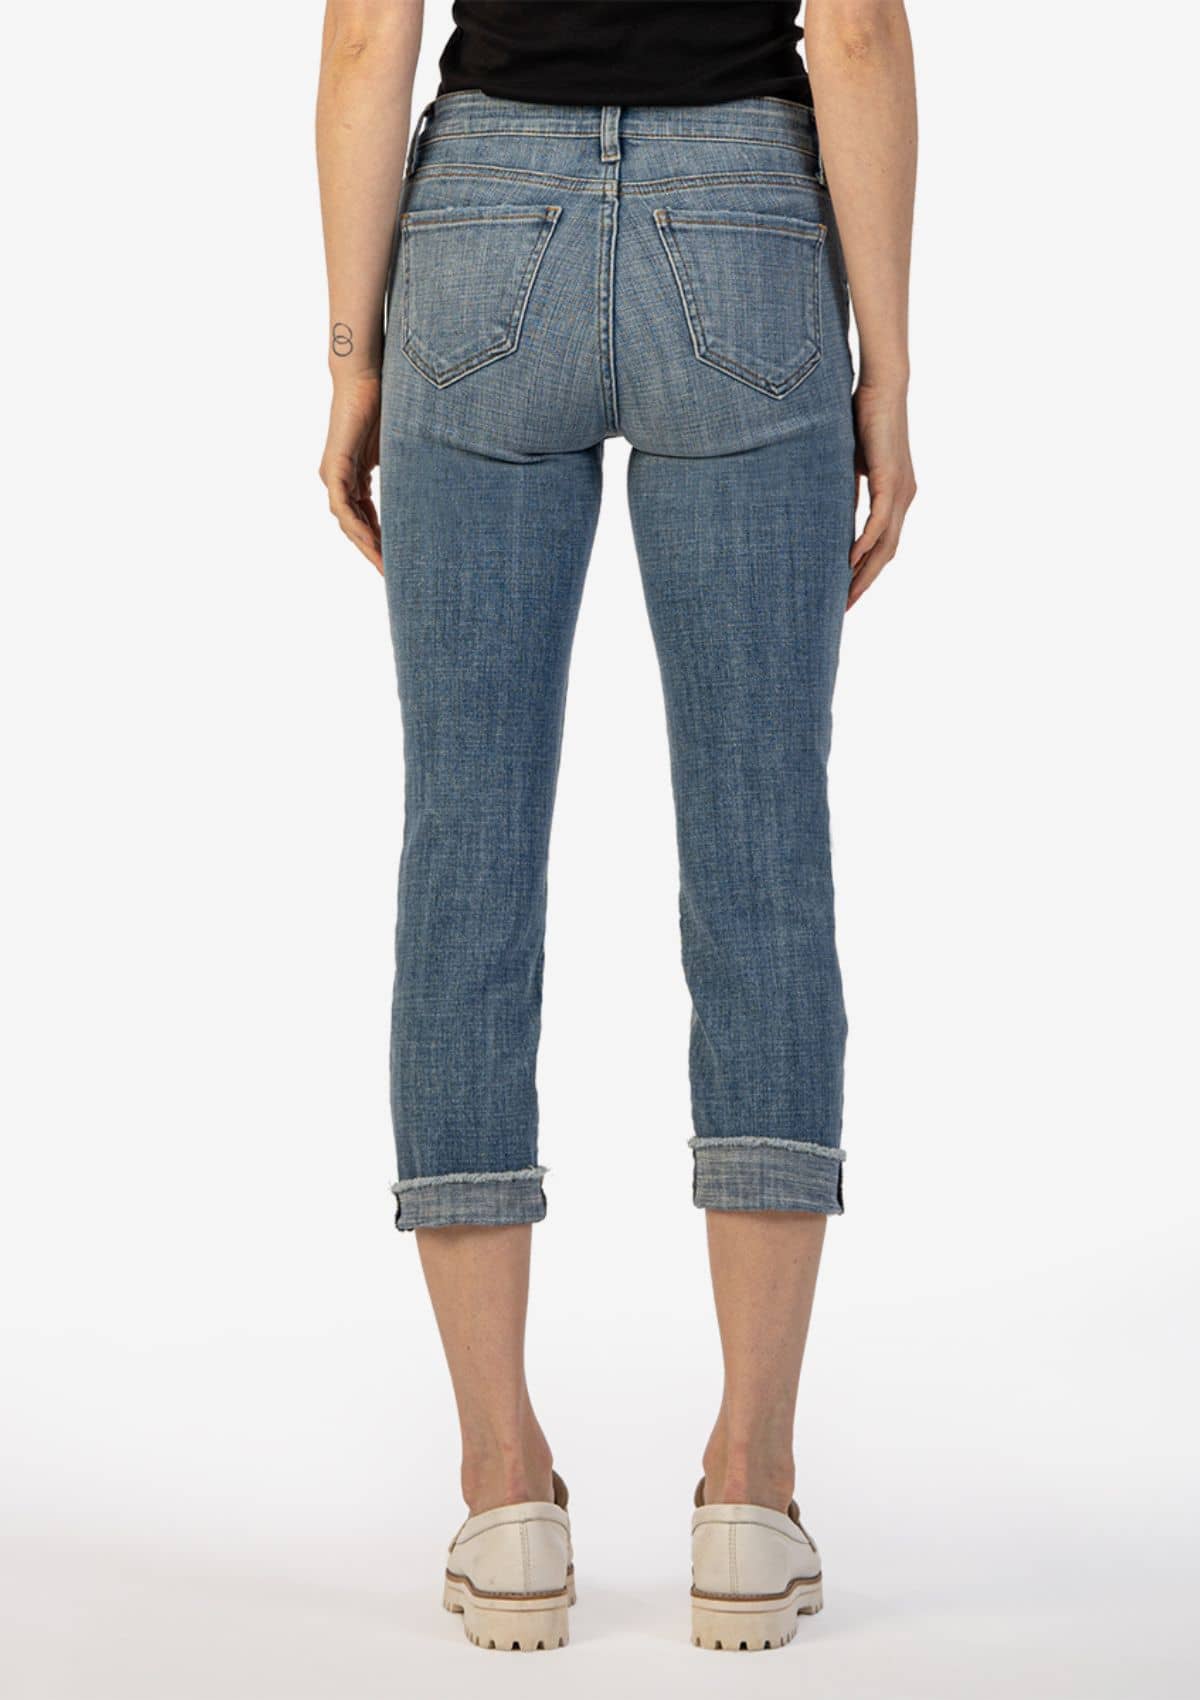 Clothing-Fashion-Jeans-Ruby Jane.